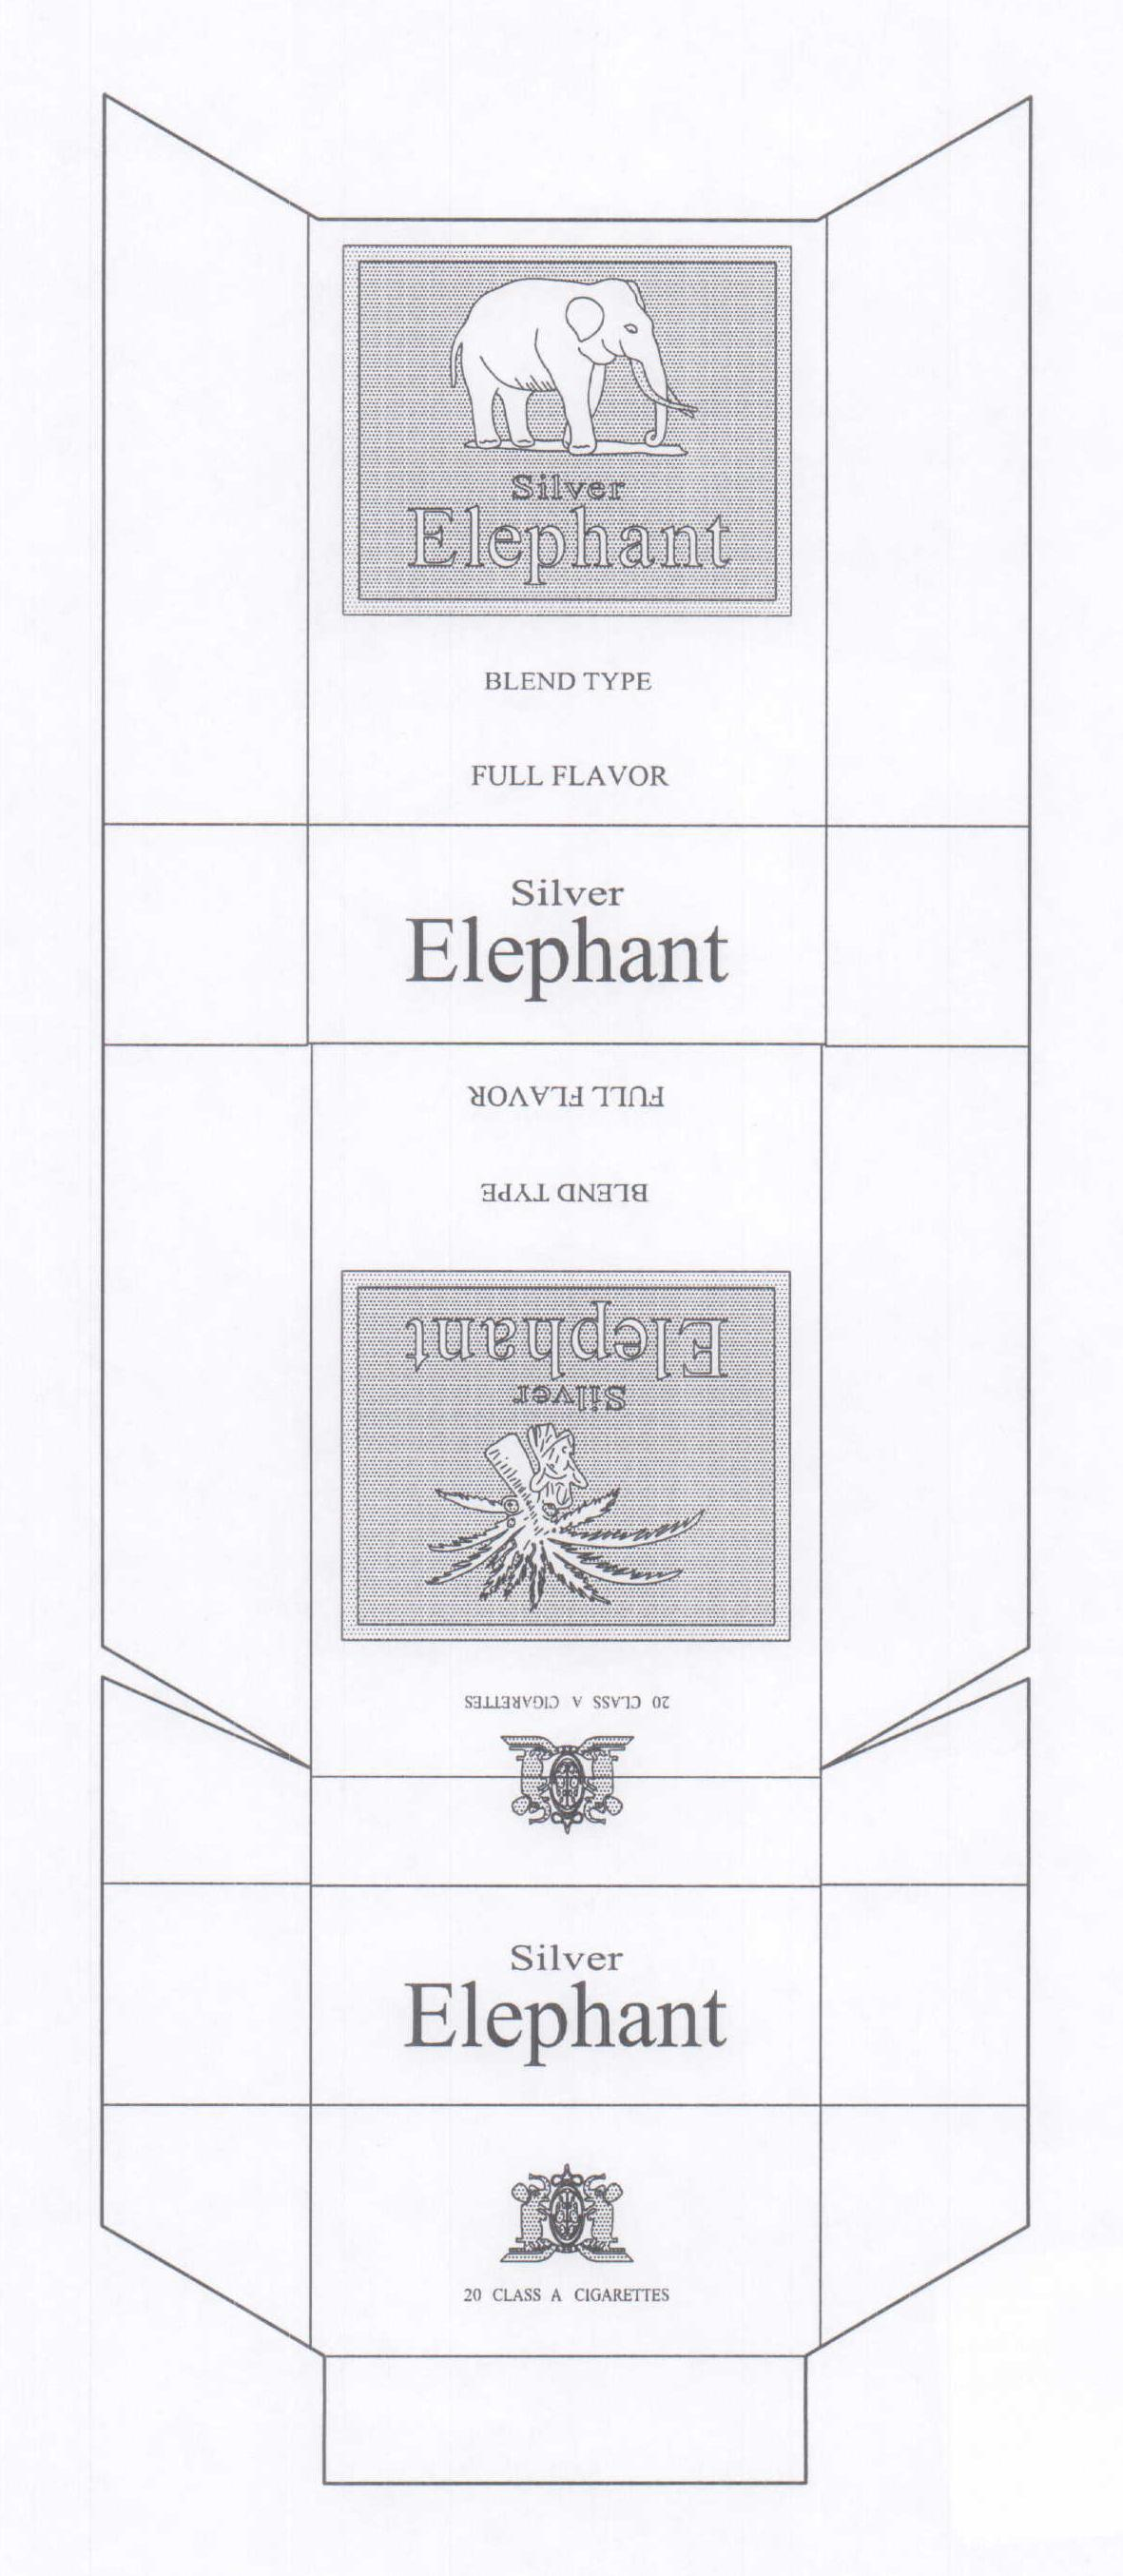  SILVER ELEPHANT BLEND TYPE FULL FLAVOR